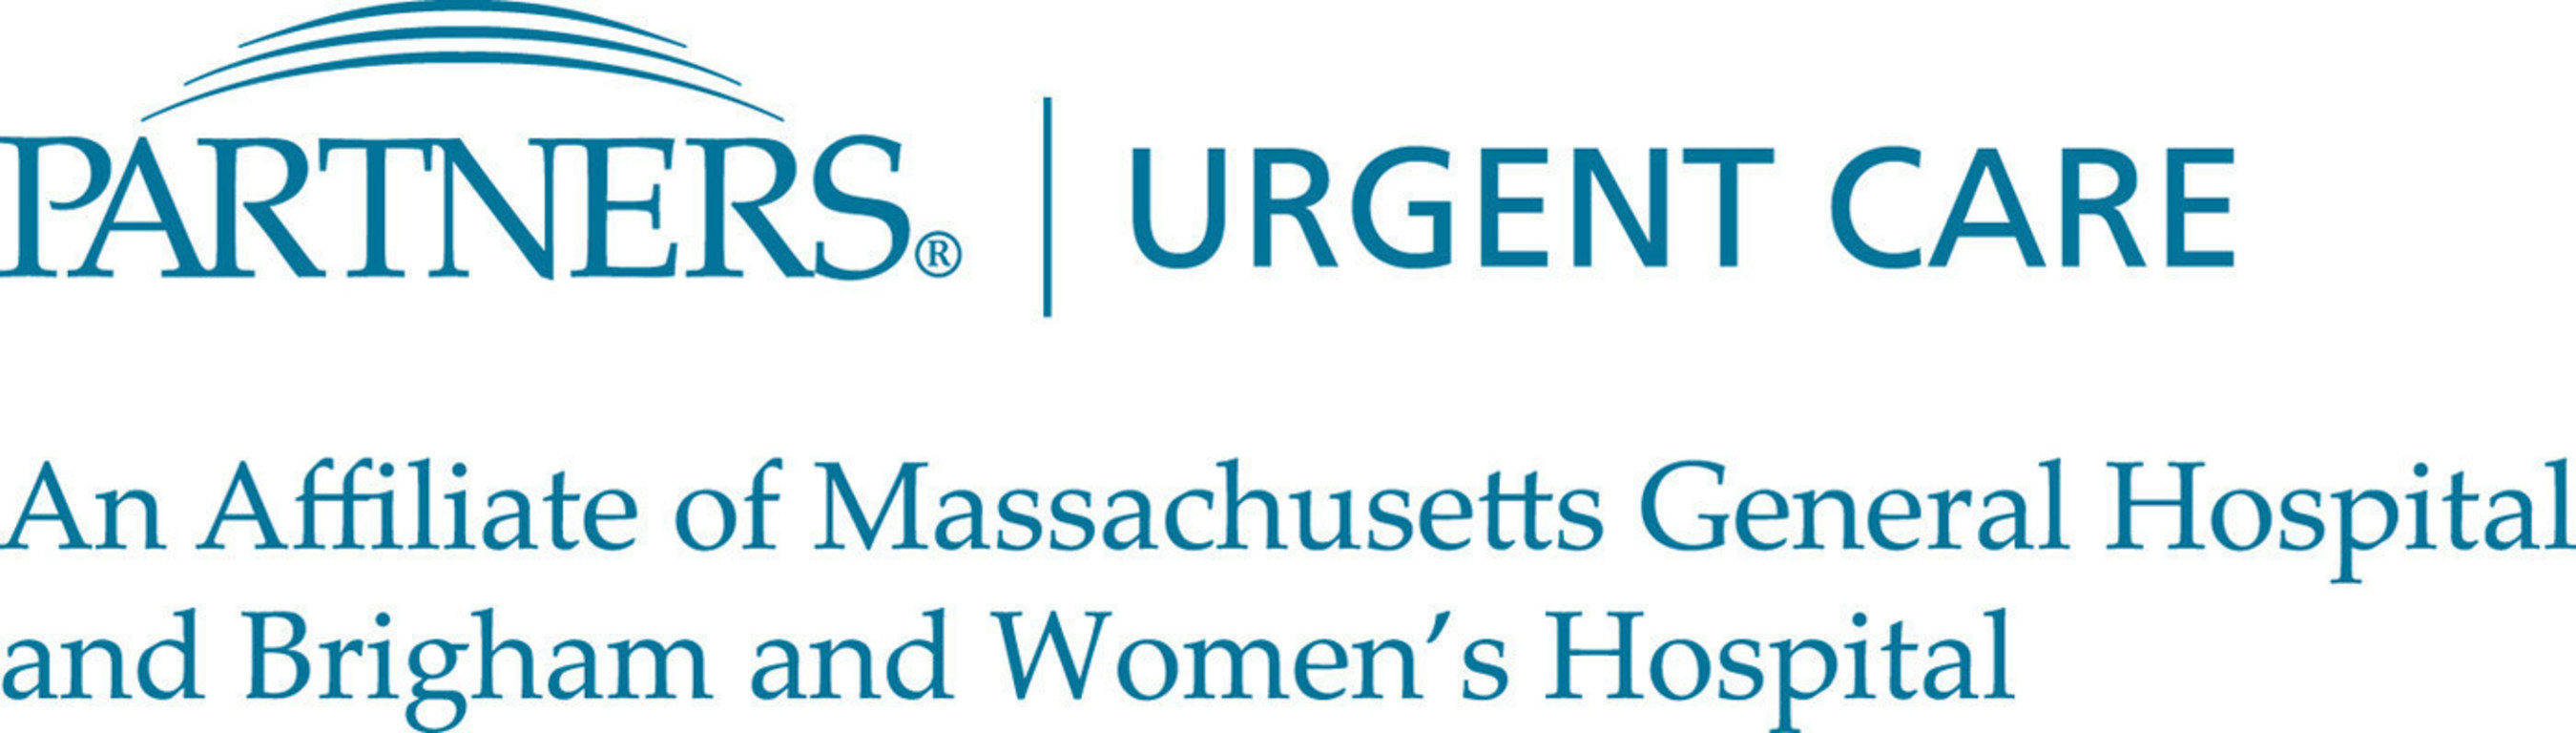 Partners Urgent Care logo